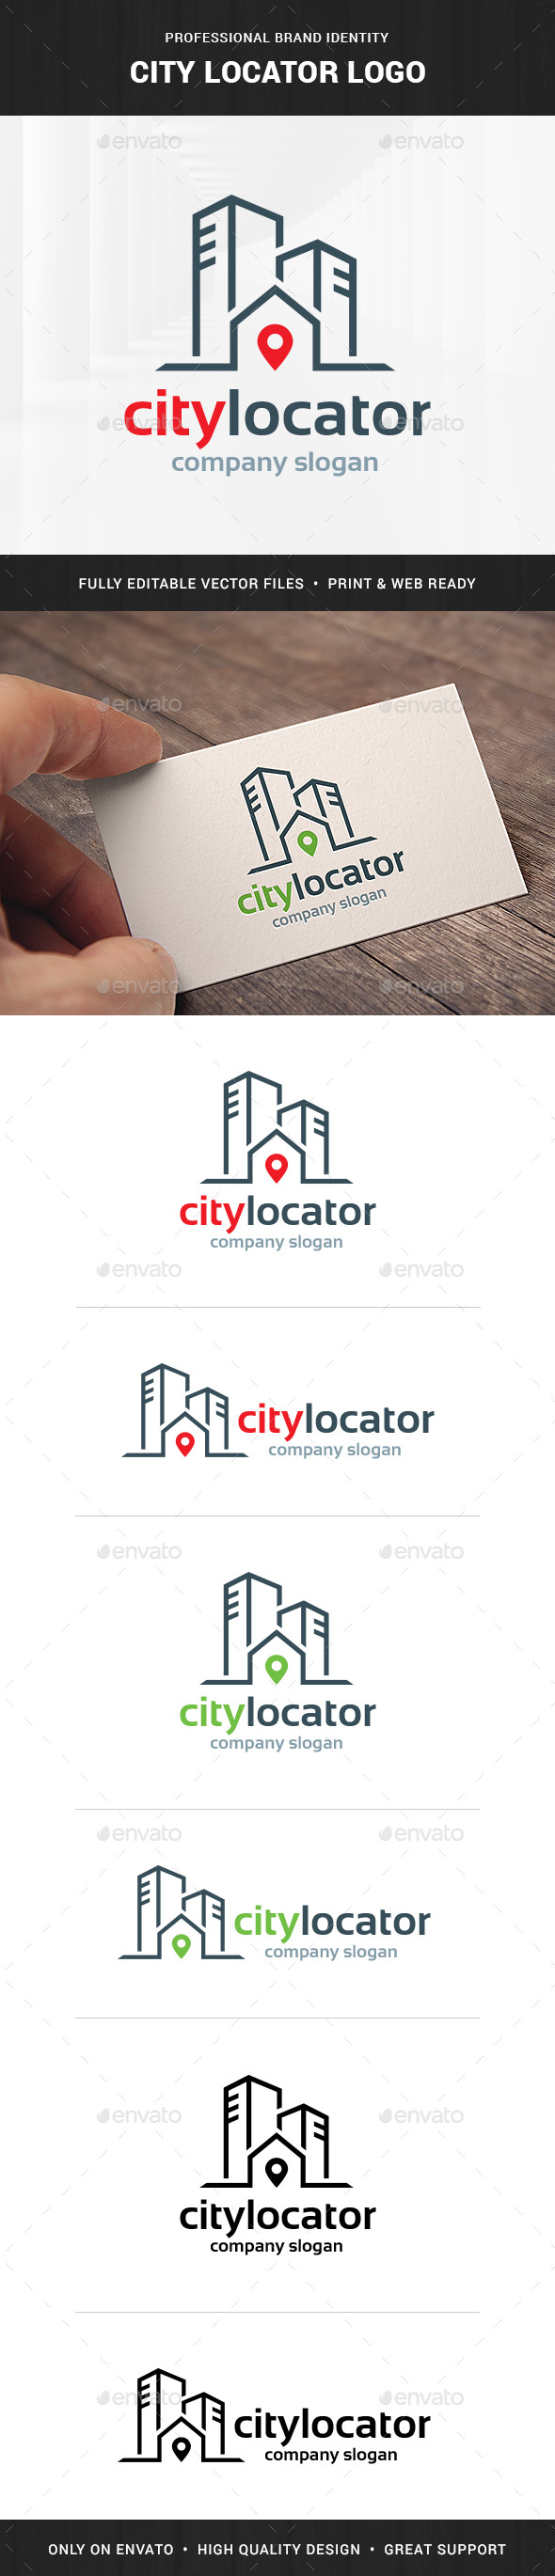 City Locator Logo Template